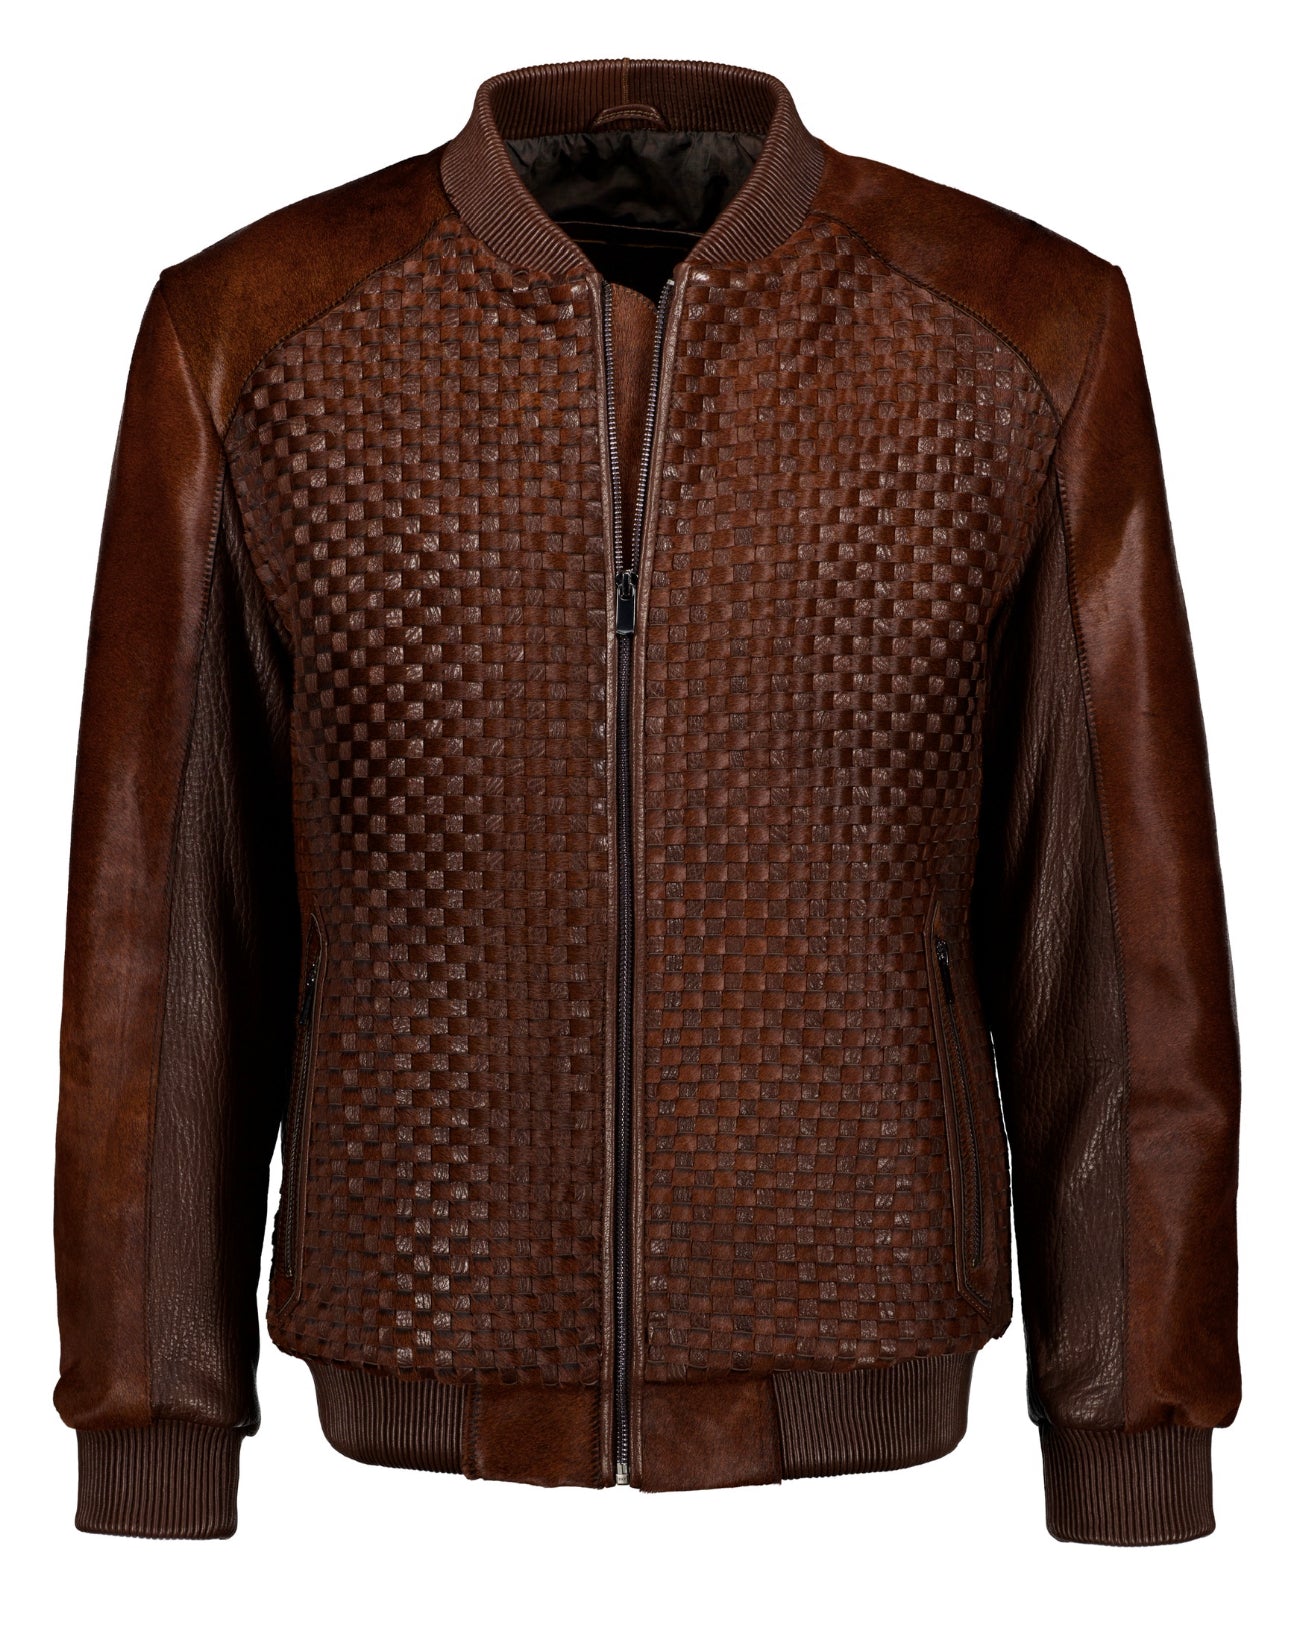 Horsehair Leather Jacket - Cognac Brown - Leather Jacket by Urbbana